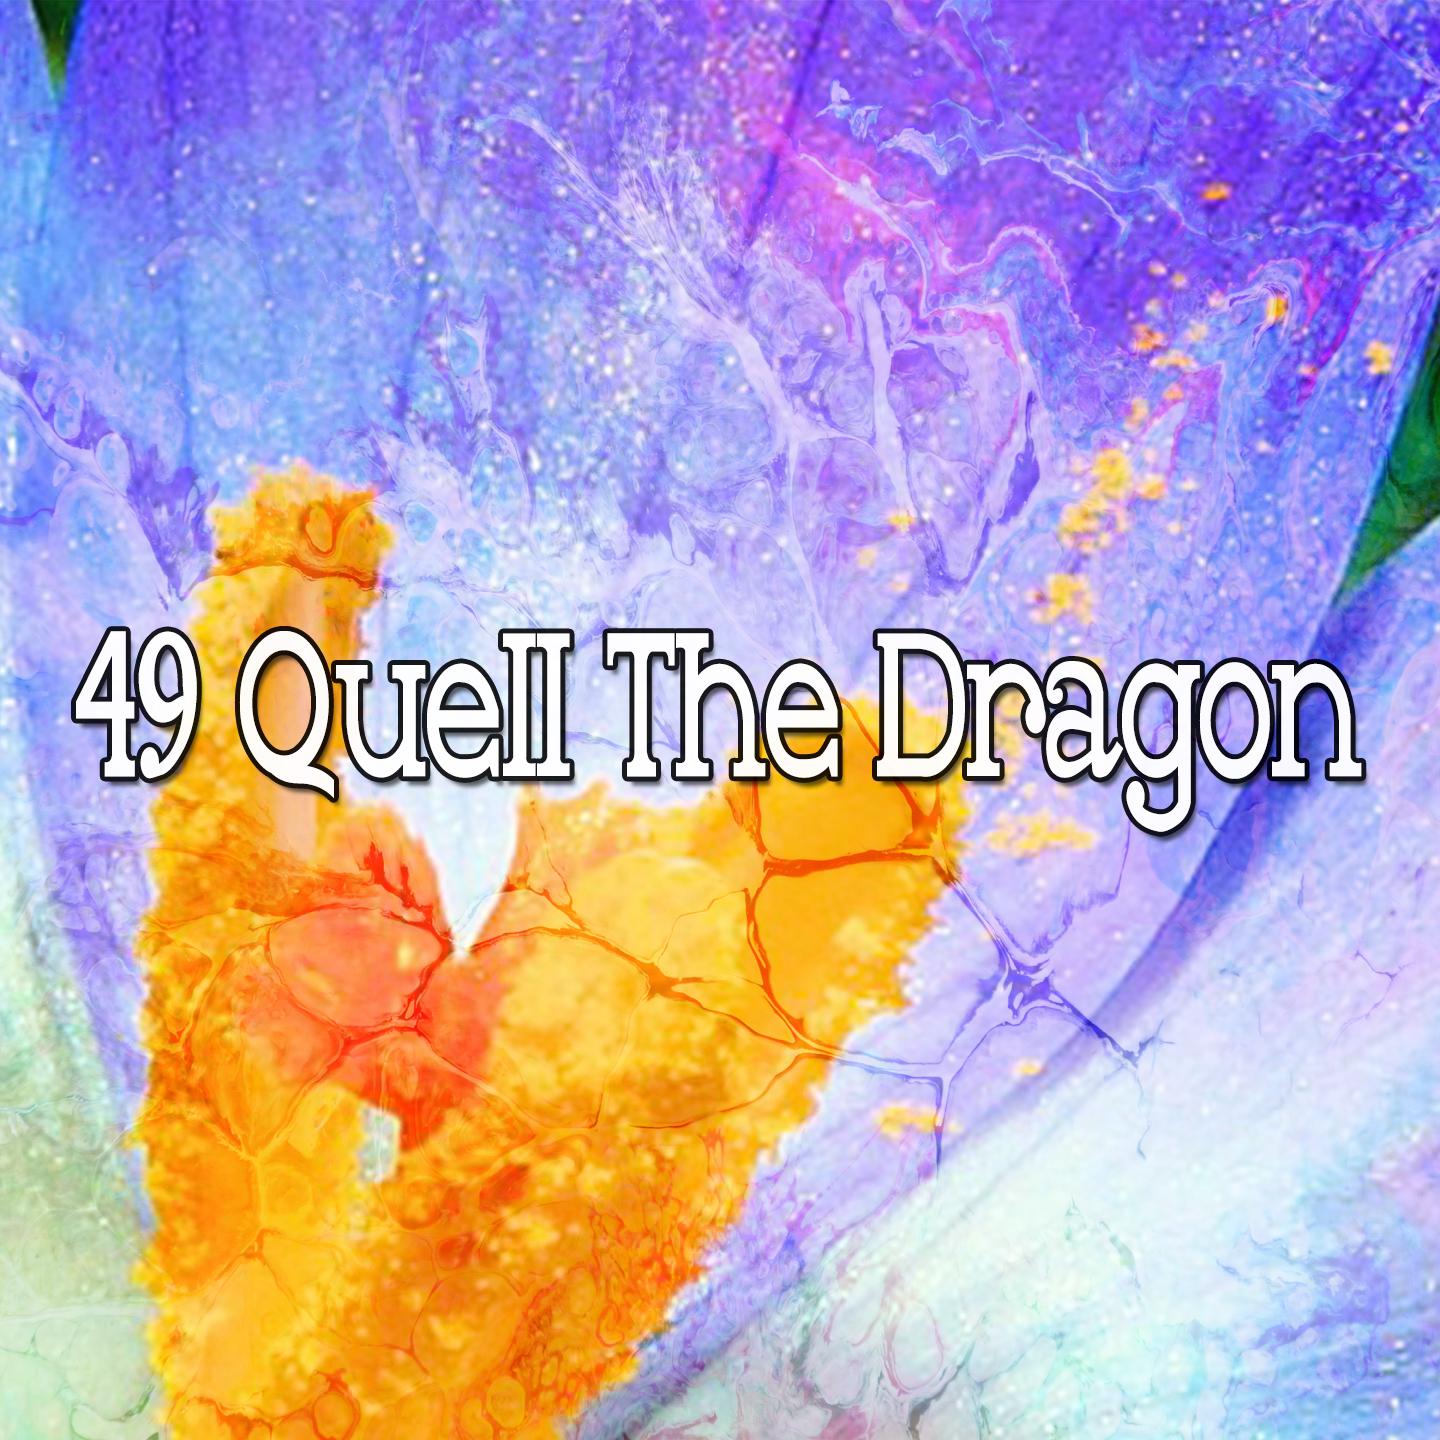 49 Quell the Dragon